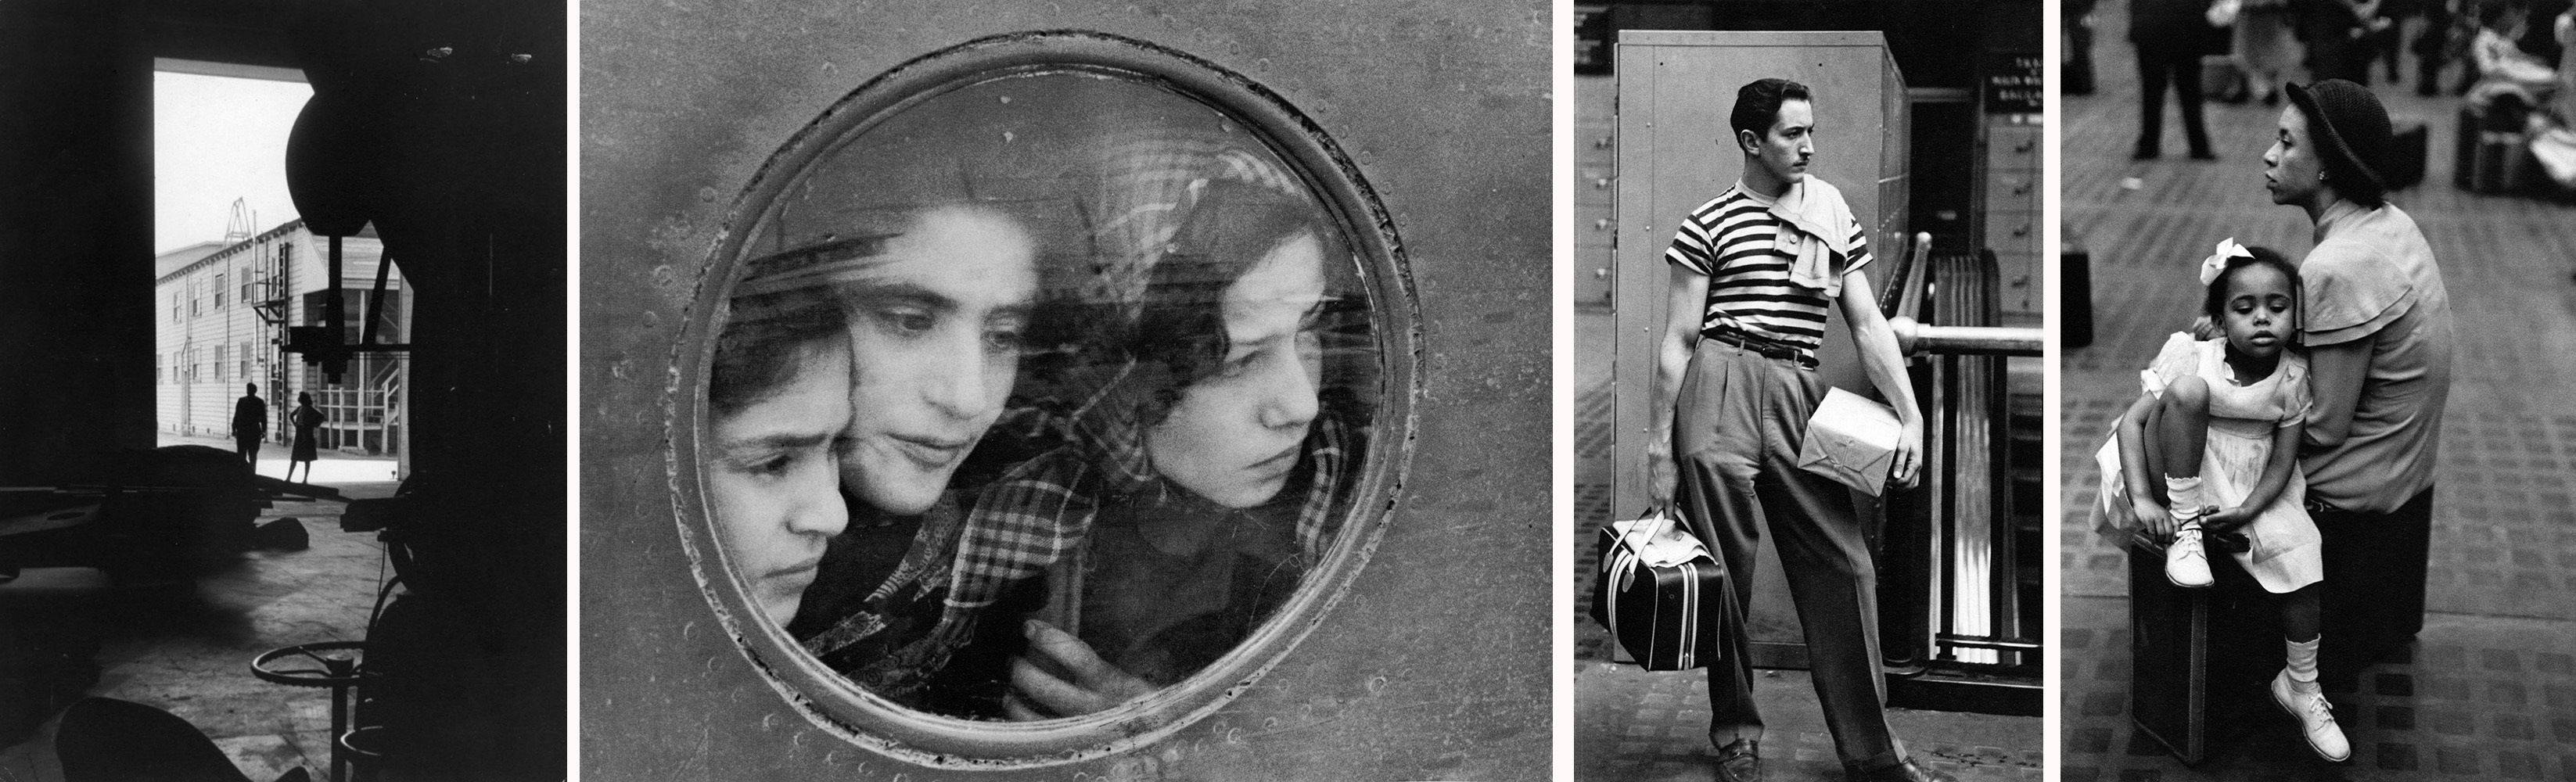 4 M.G.M 1942 Εβραίοι πρόσφυγες από το Ιράκ στο Τελ Αβιβ 1951 Νέα Υόρκη 1945 iFocus